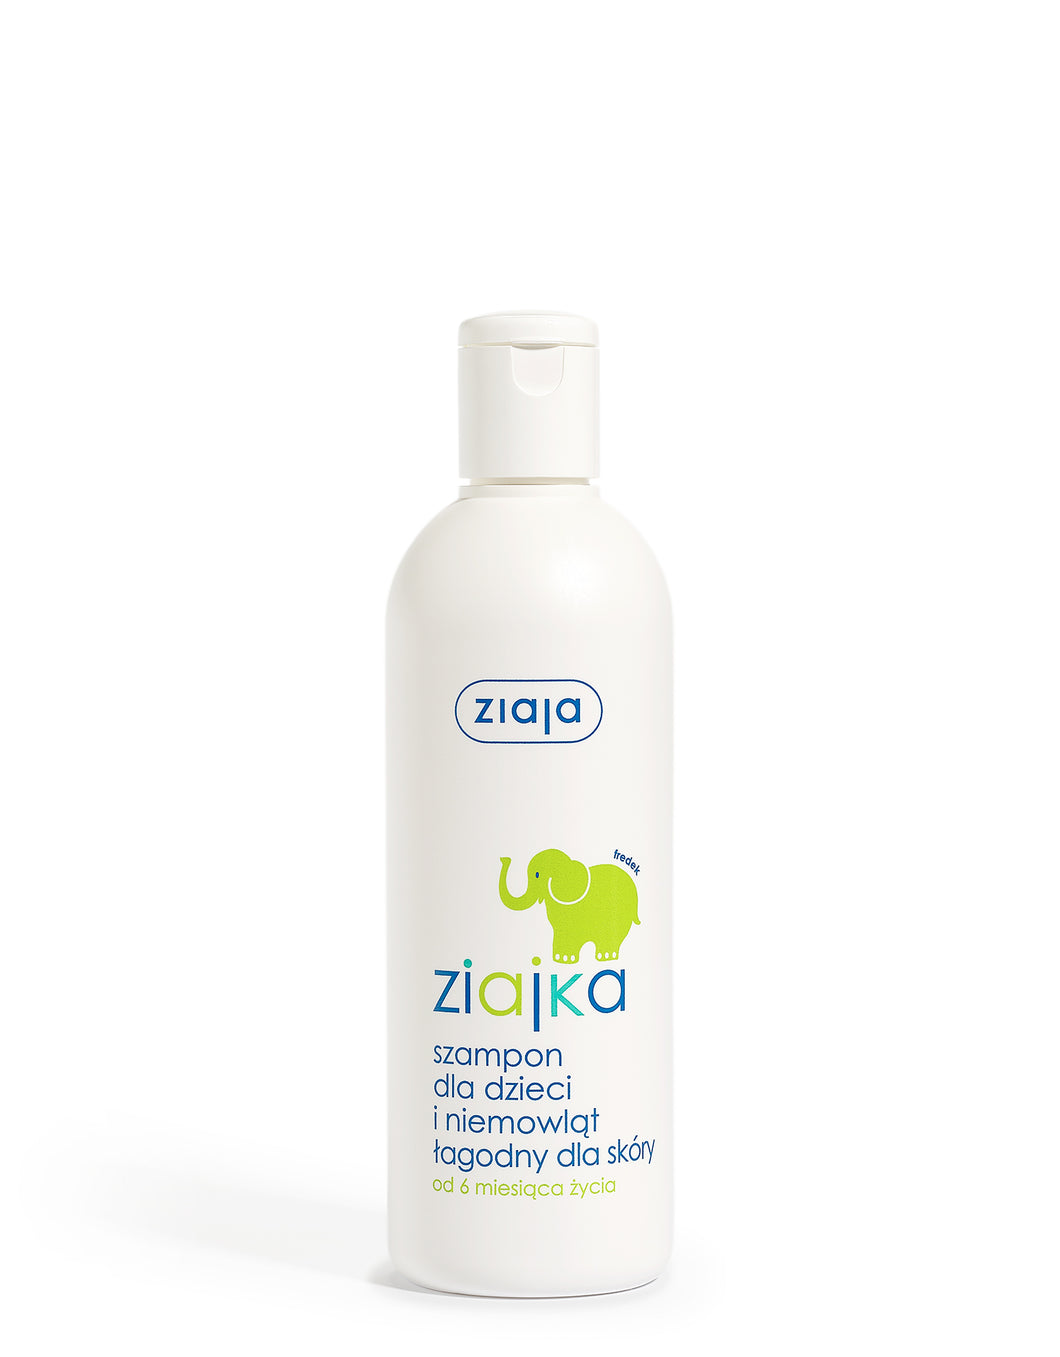 ZIAJKA shampoo for children and babies, gentle on the skin 270 ml